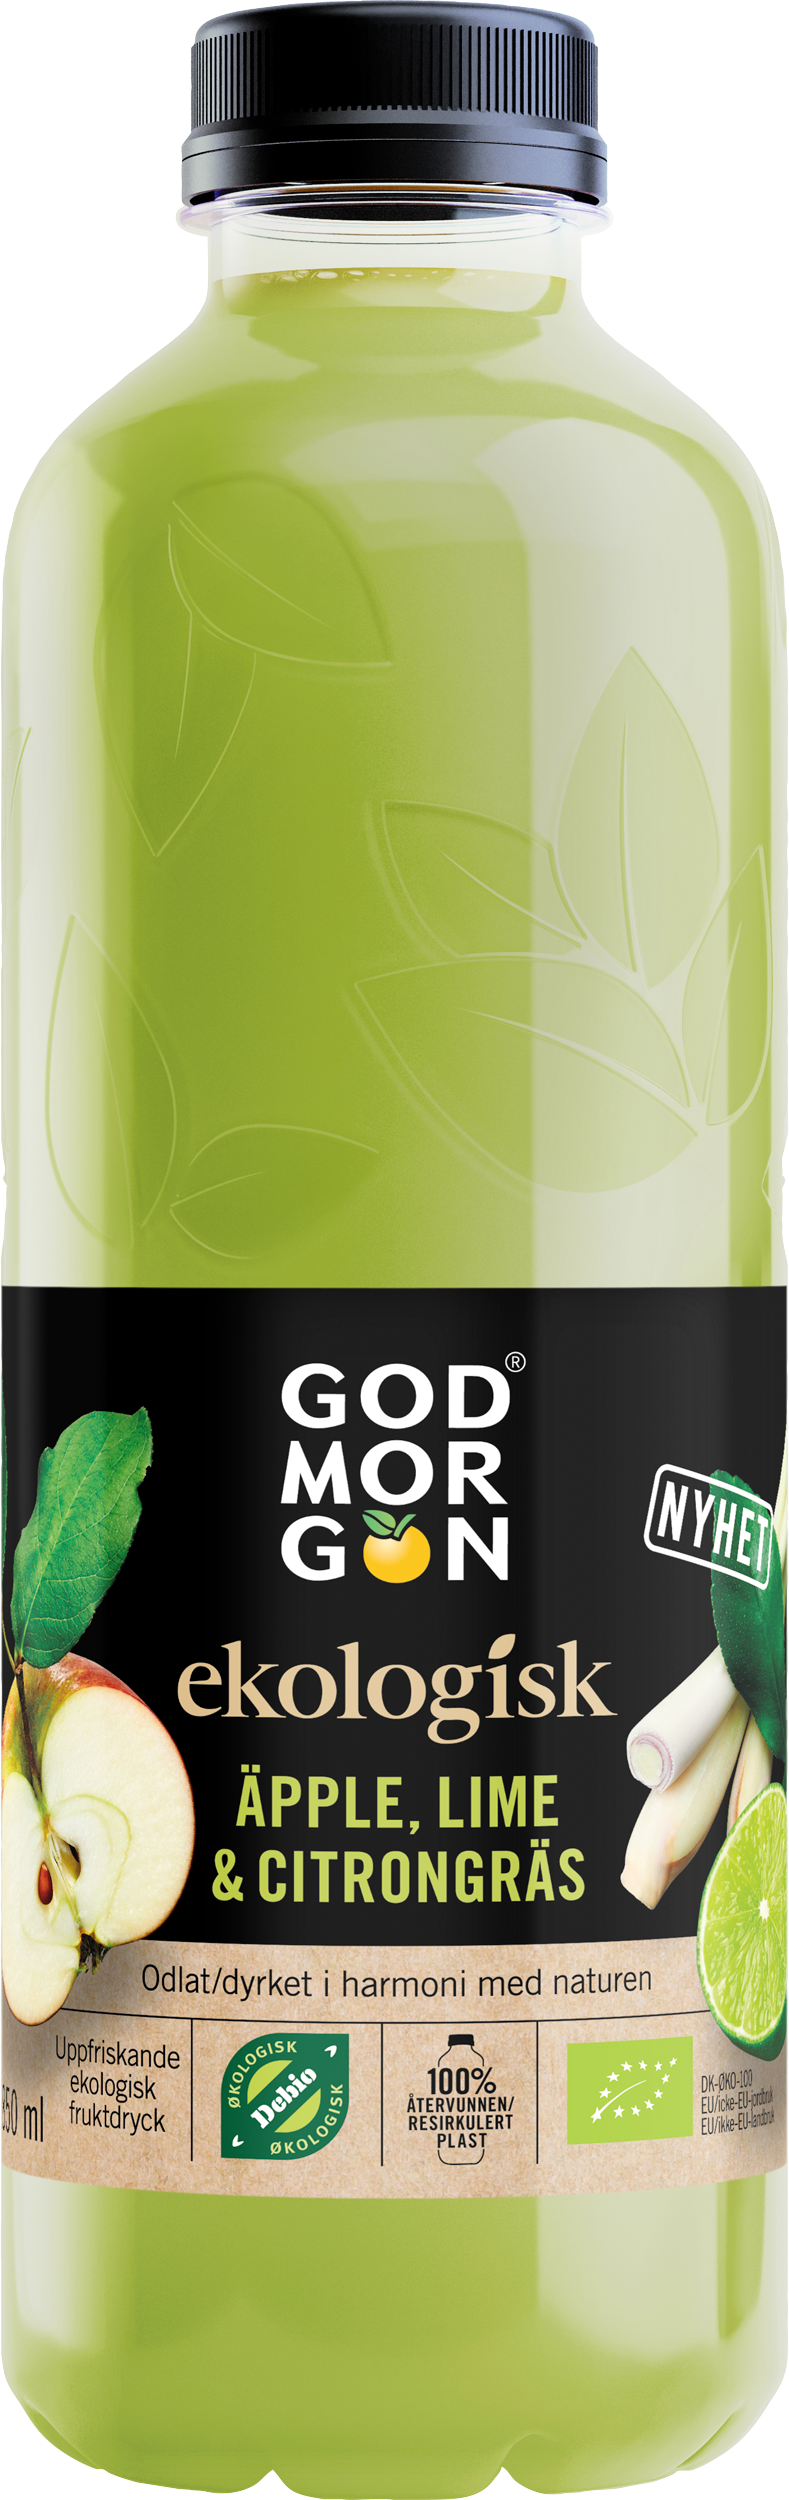 God Morgon® Ekologisk Äpple, Lime & Citrongräs 0,85L.png